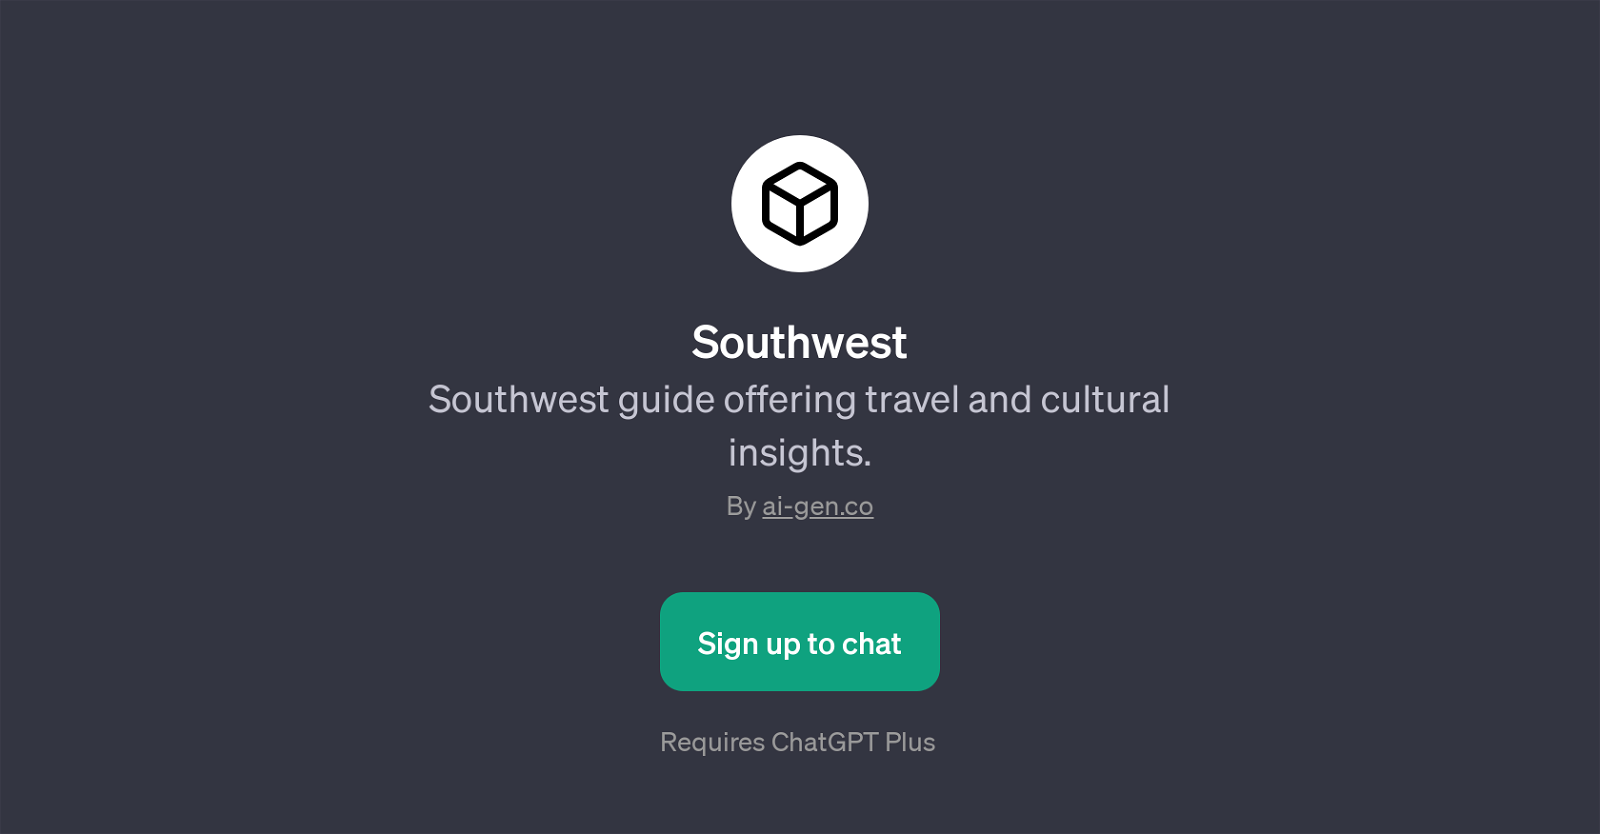 Southwest website